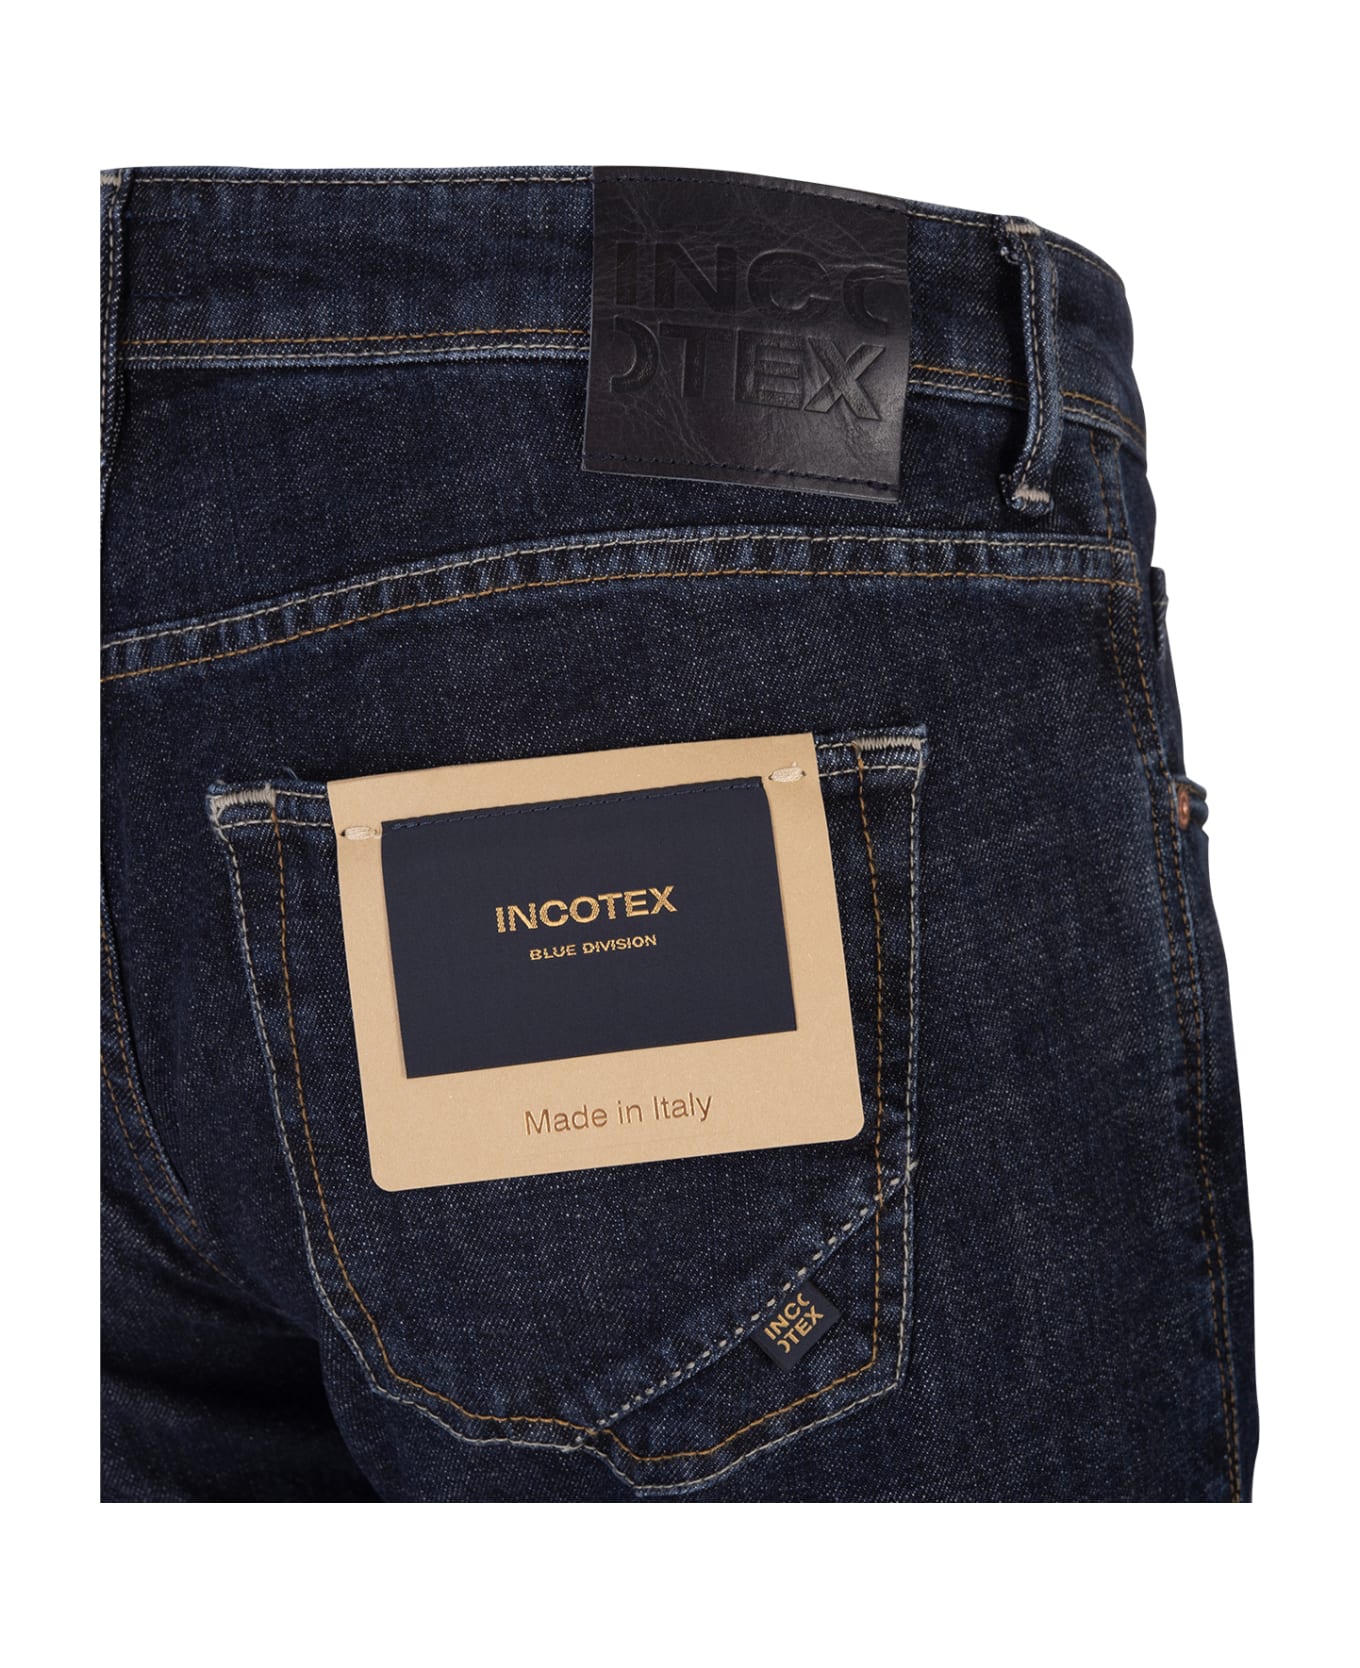 Incotex Man Straight Leg Jeans In Indigo Blue Denim - Wash